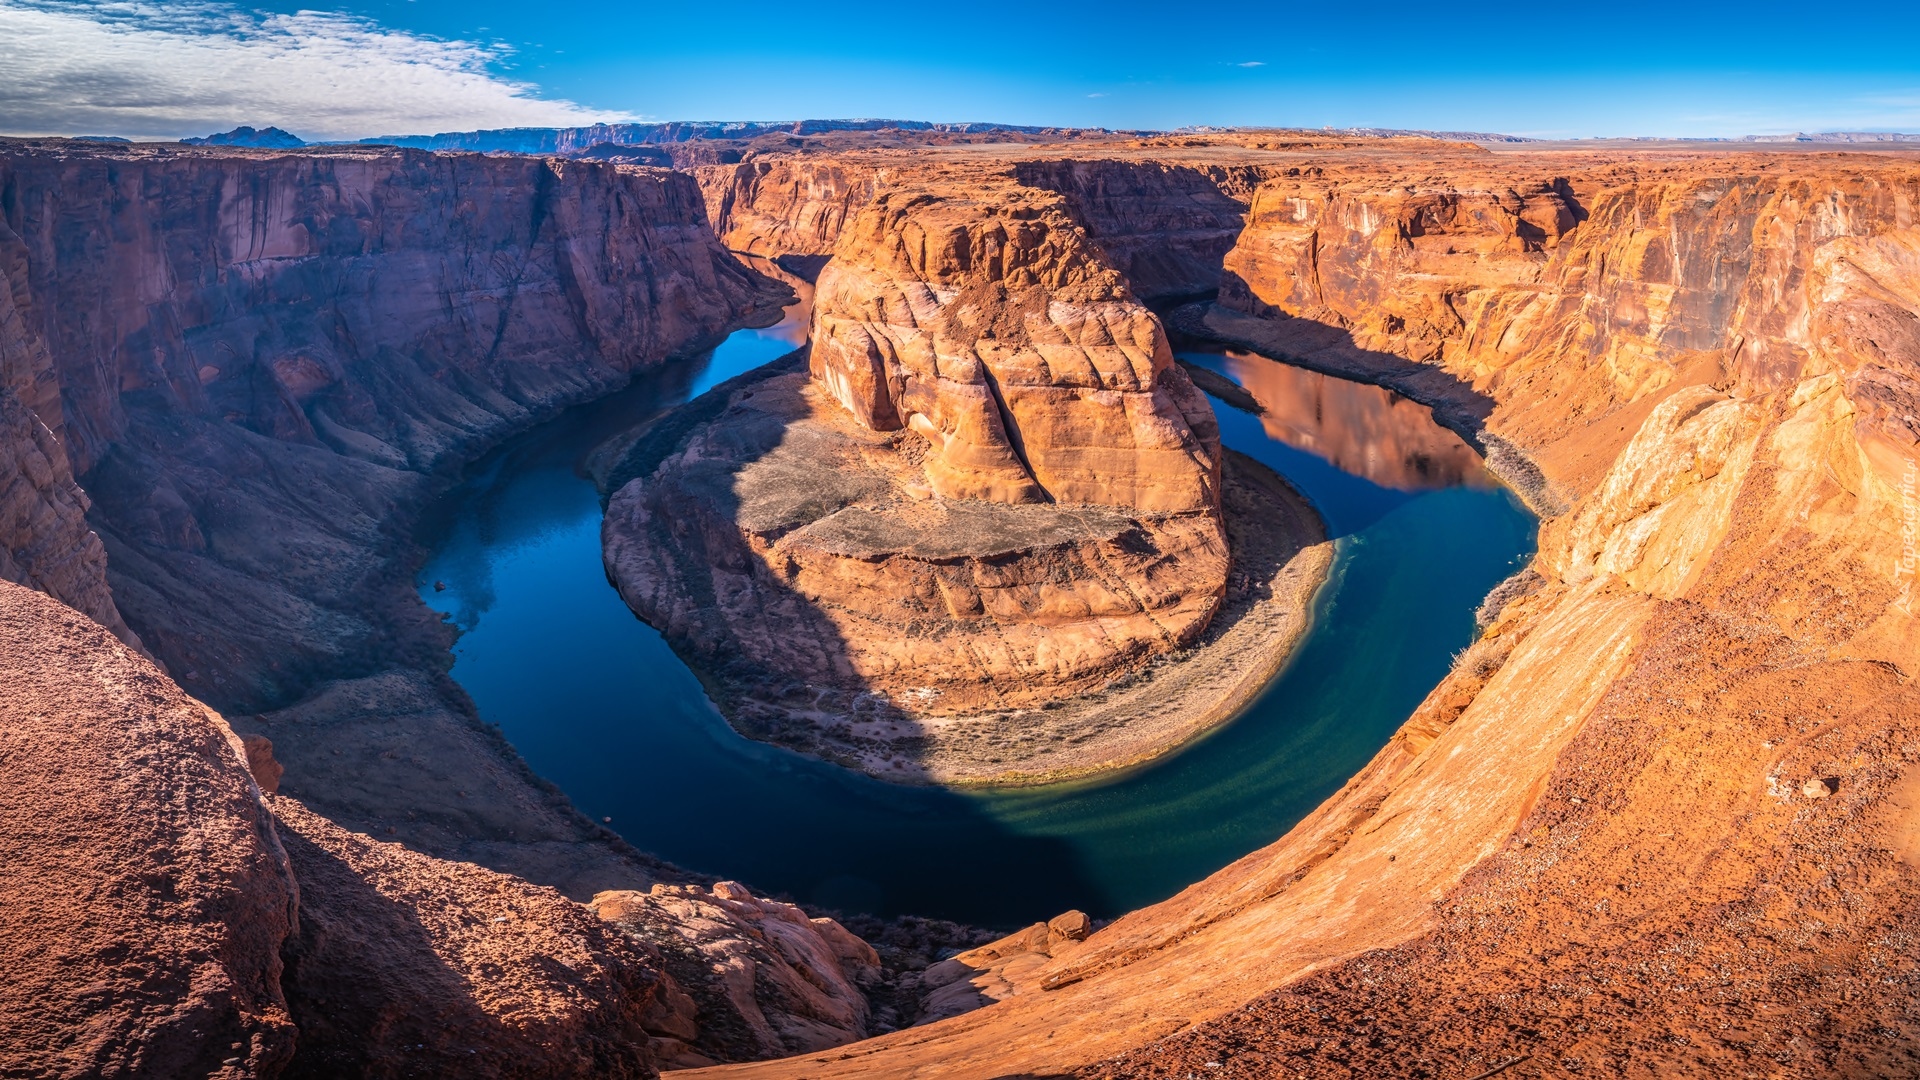 Park Narodowy Glen Canyon, Kanion, Rzeka Kolorado, Zakole, Meander, Horseshoe Bend, Skały, Arizona, Stany Zjednoczone